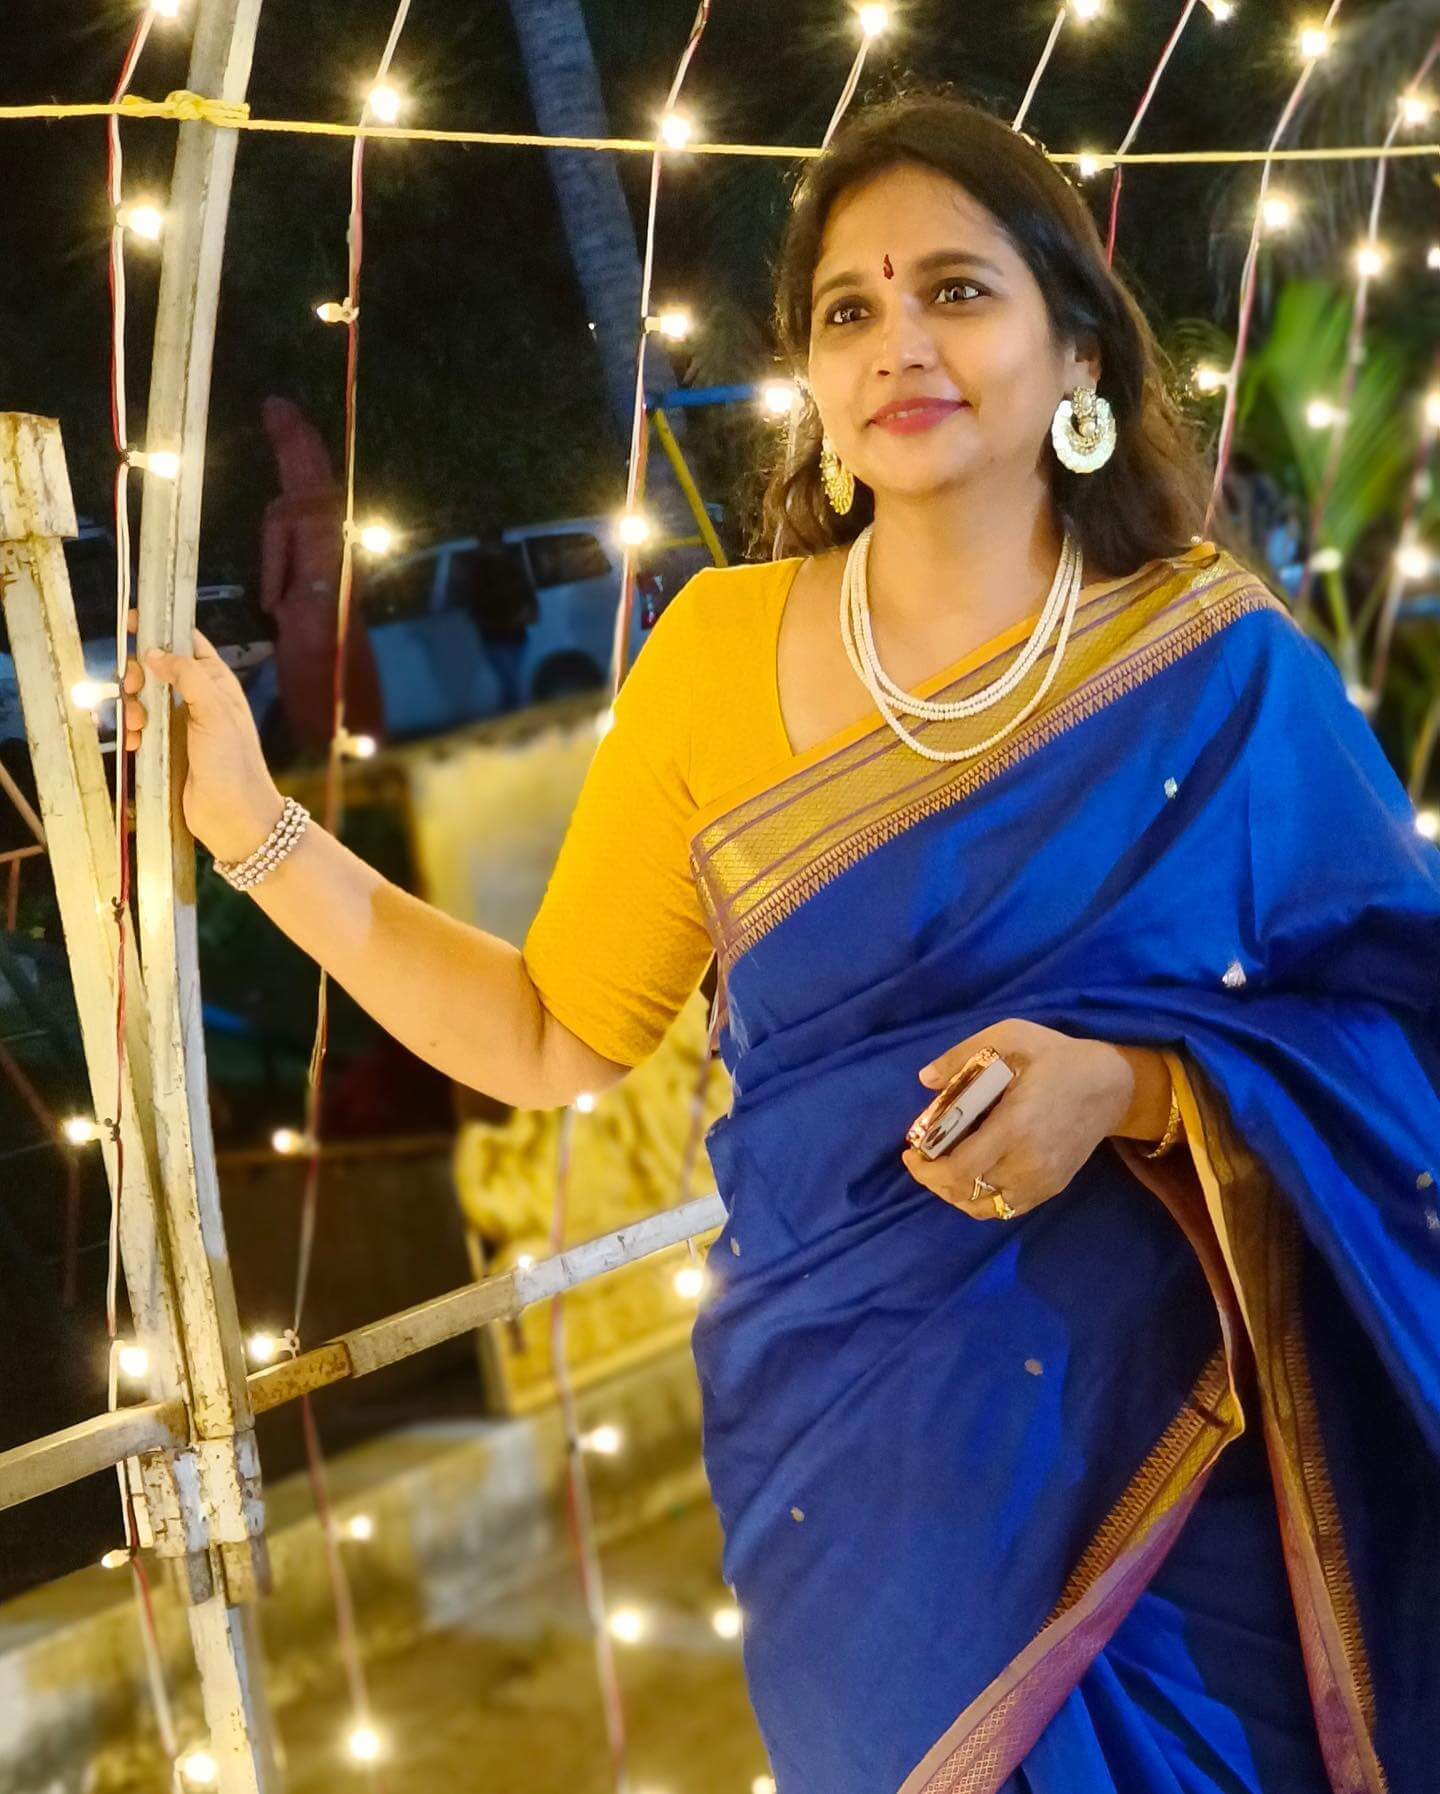 Actress Vinodhini in dark blue saree and yellow blouse